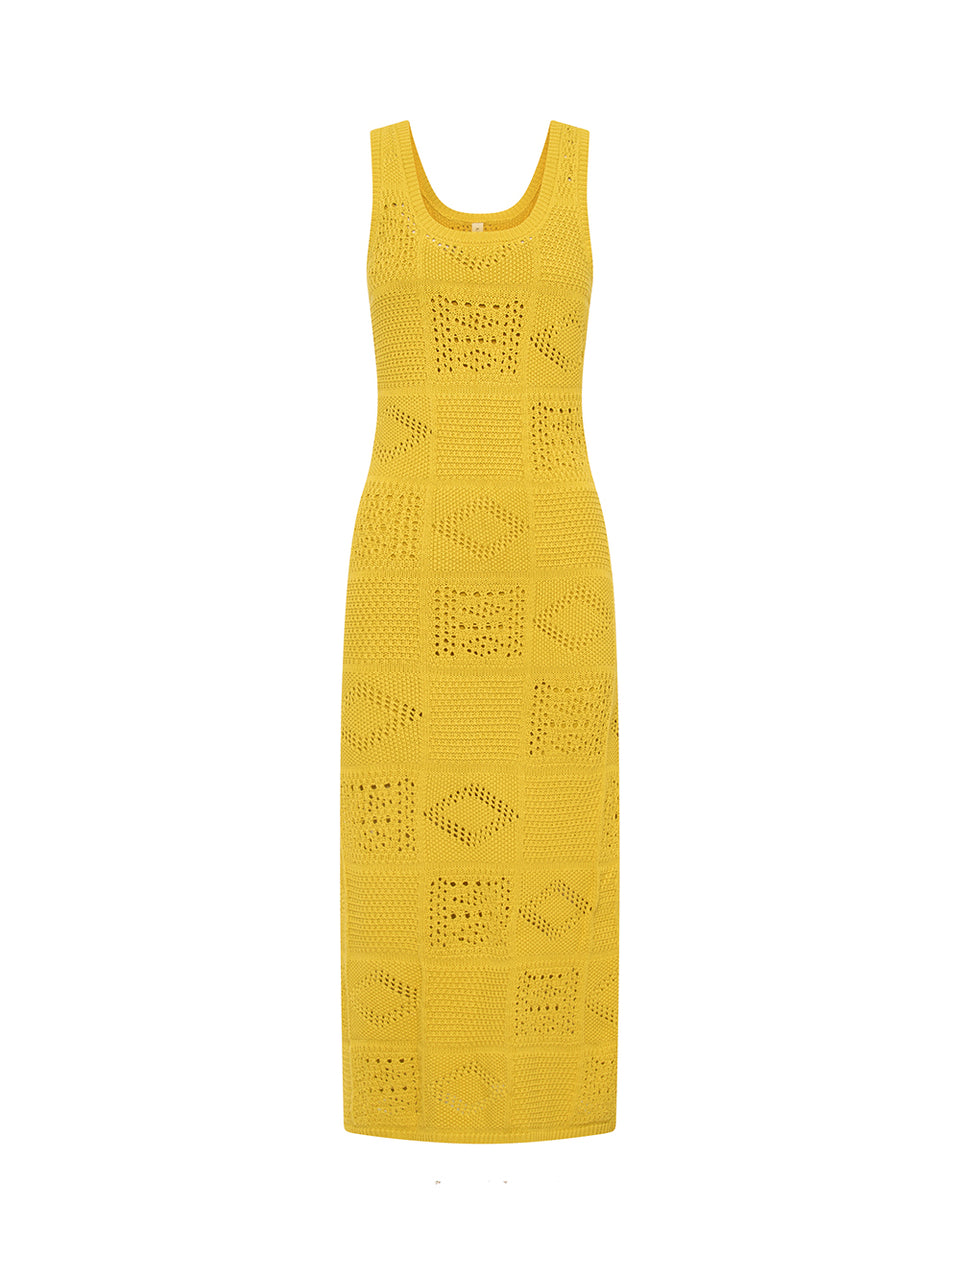 KIVARI Clementine Midi Dress | Yellow Crochet Dress